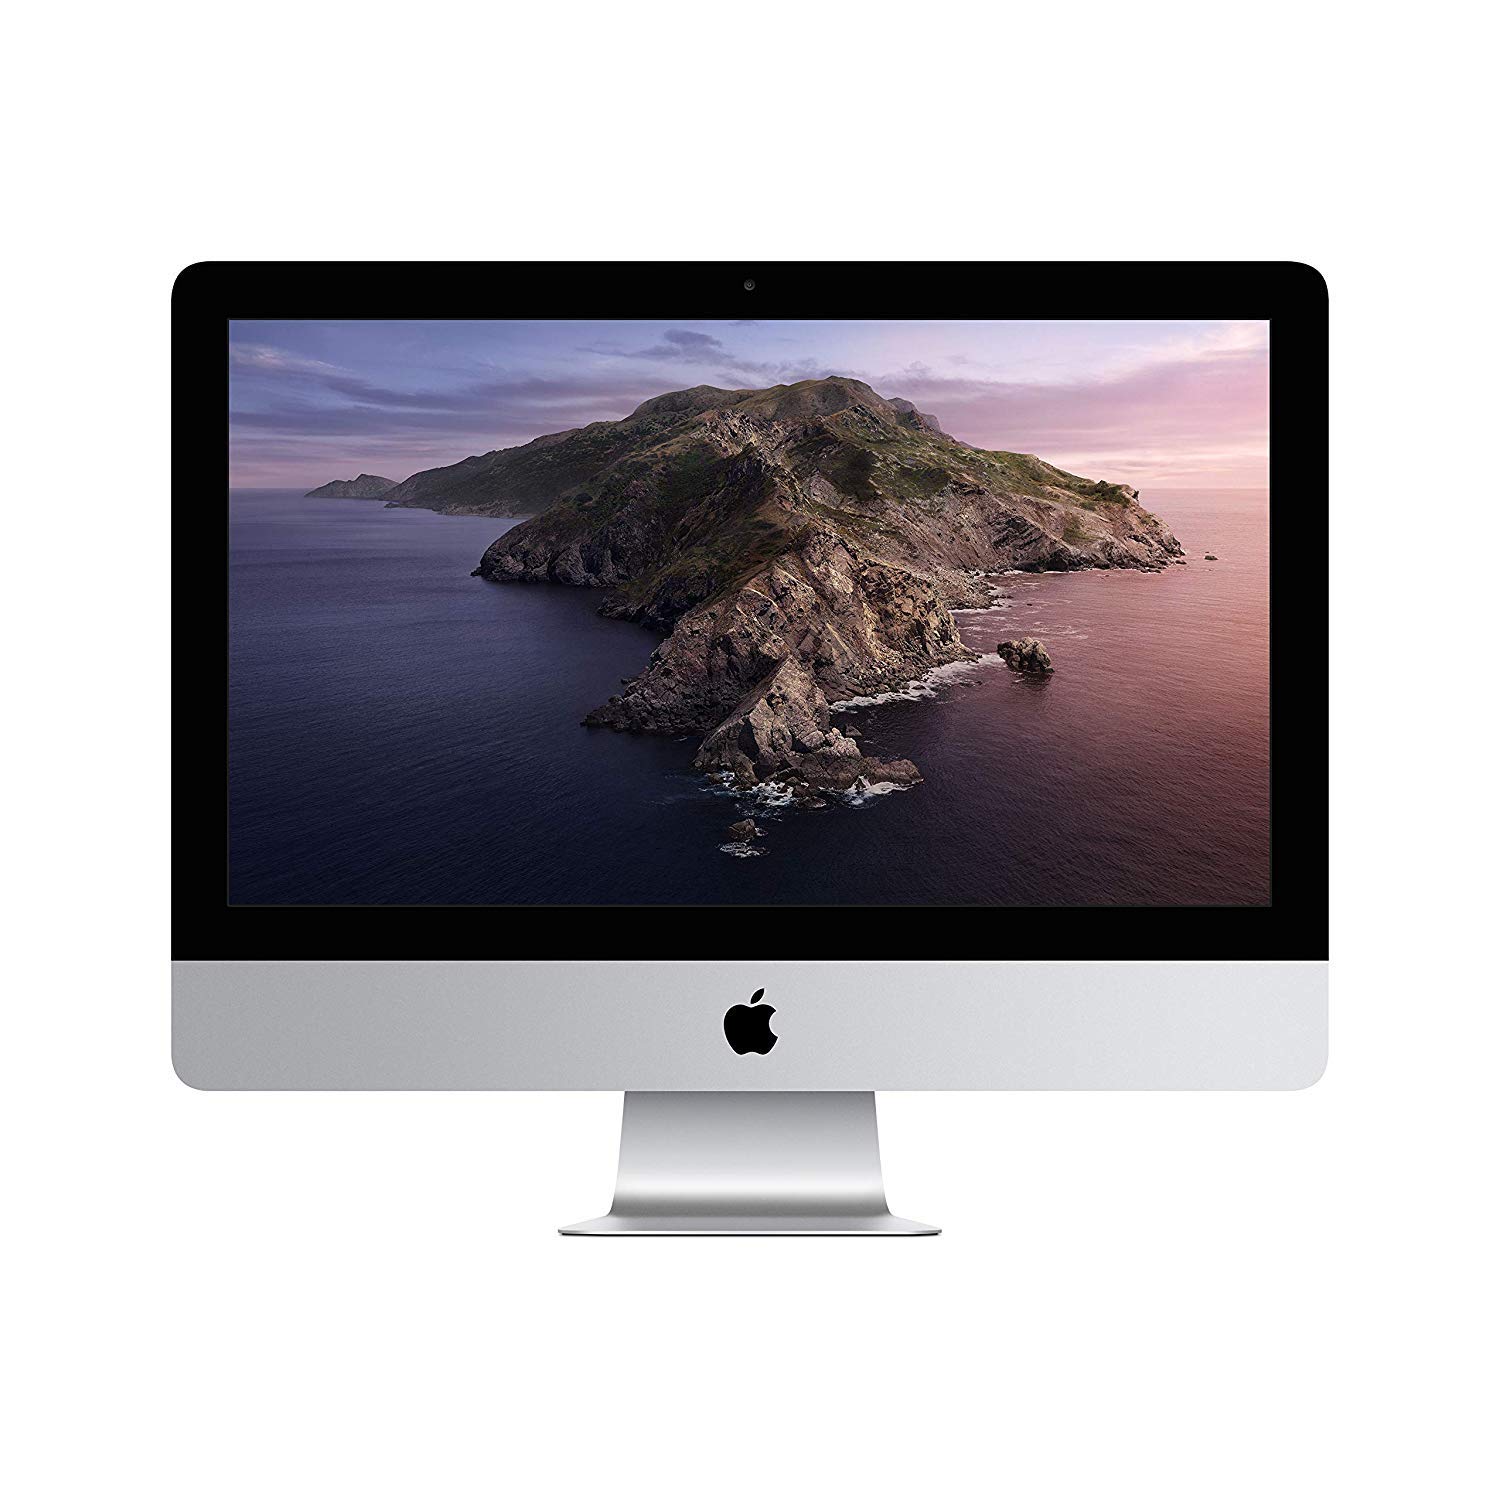  Apple iMac 21.5-inch /Retina 4K (2017) AIO